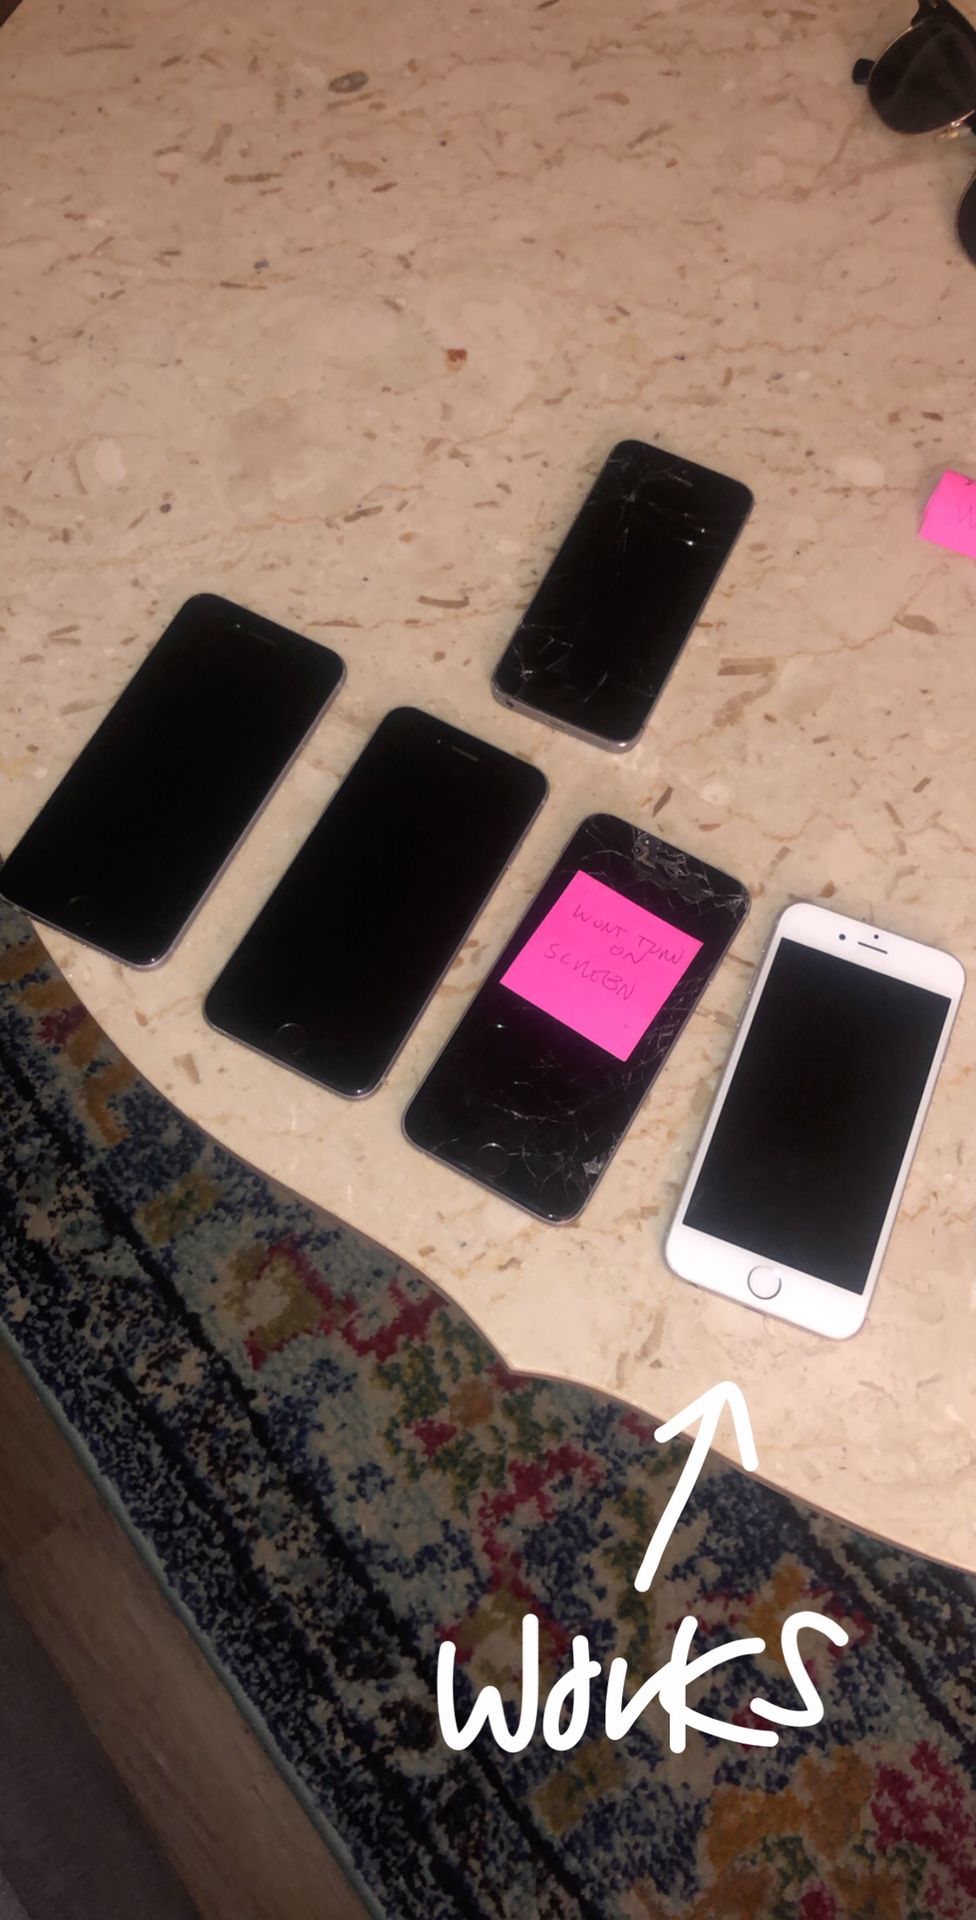 5 iPhones (3 6s, 1 white seven, 1 iPhone 5)